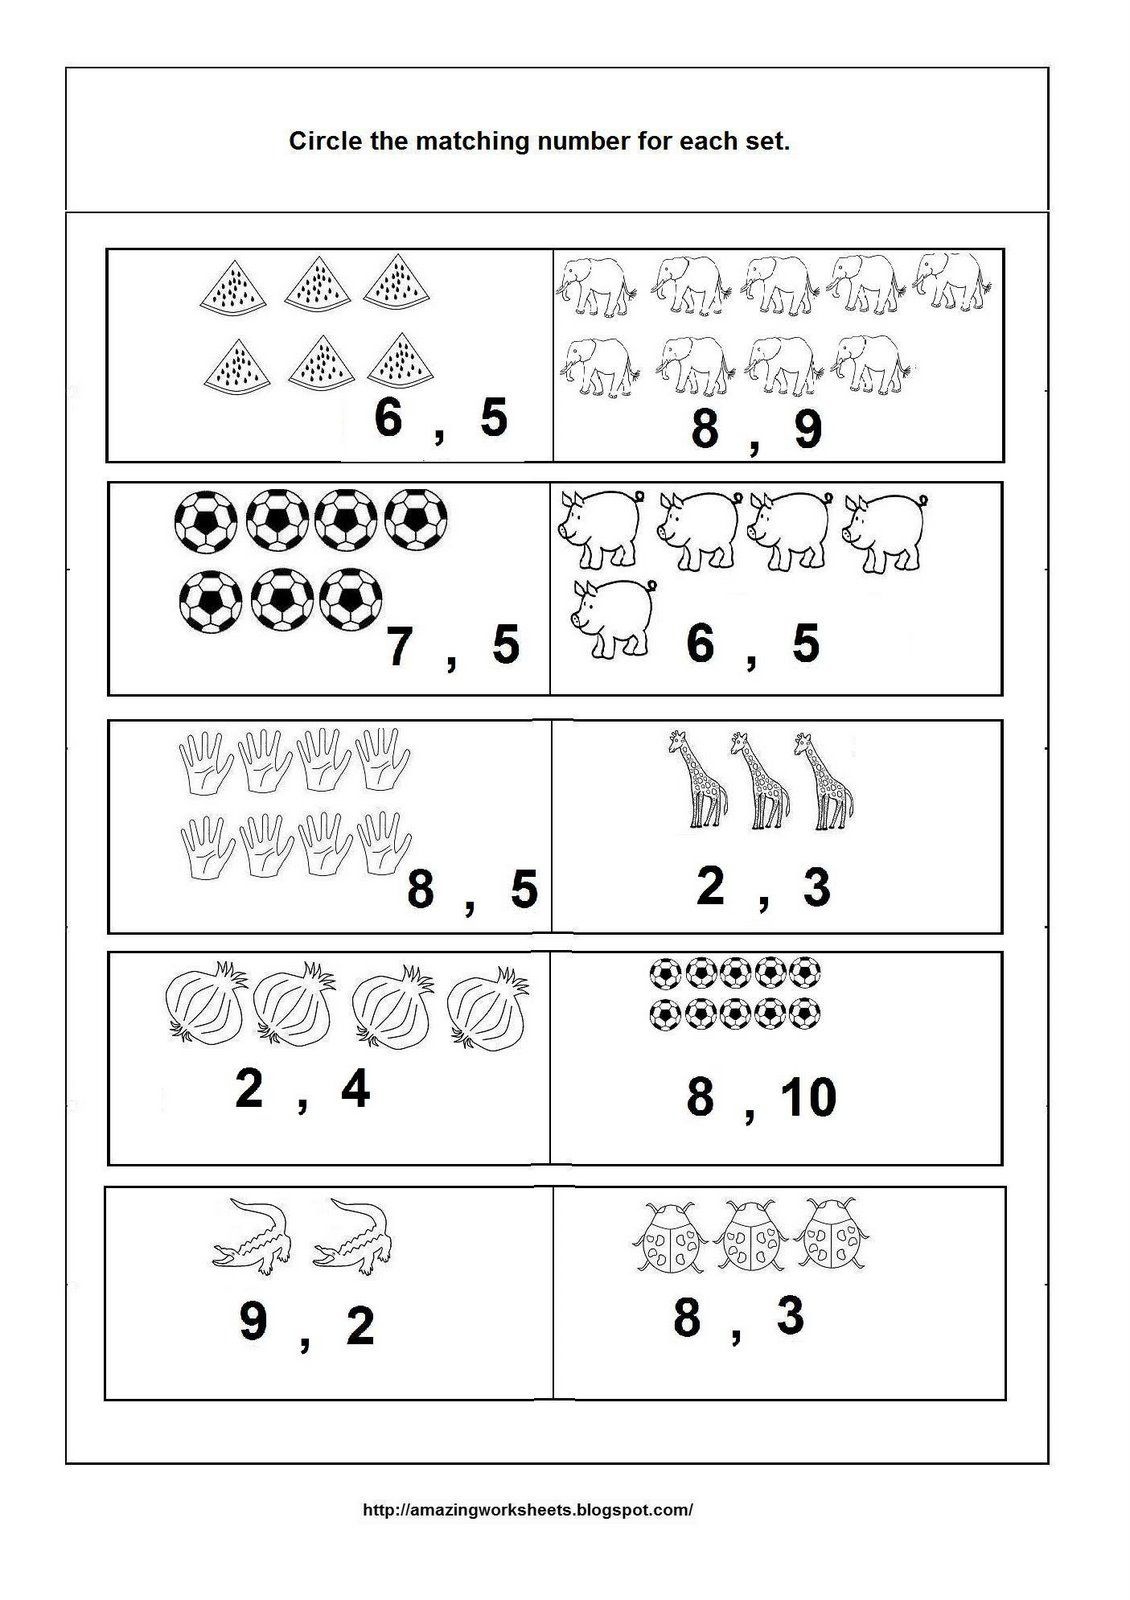 Print Worksheet And Circle The Matching Number | Free Math - Free Printable Kindergarten Math Activities